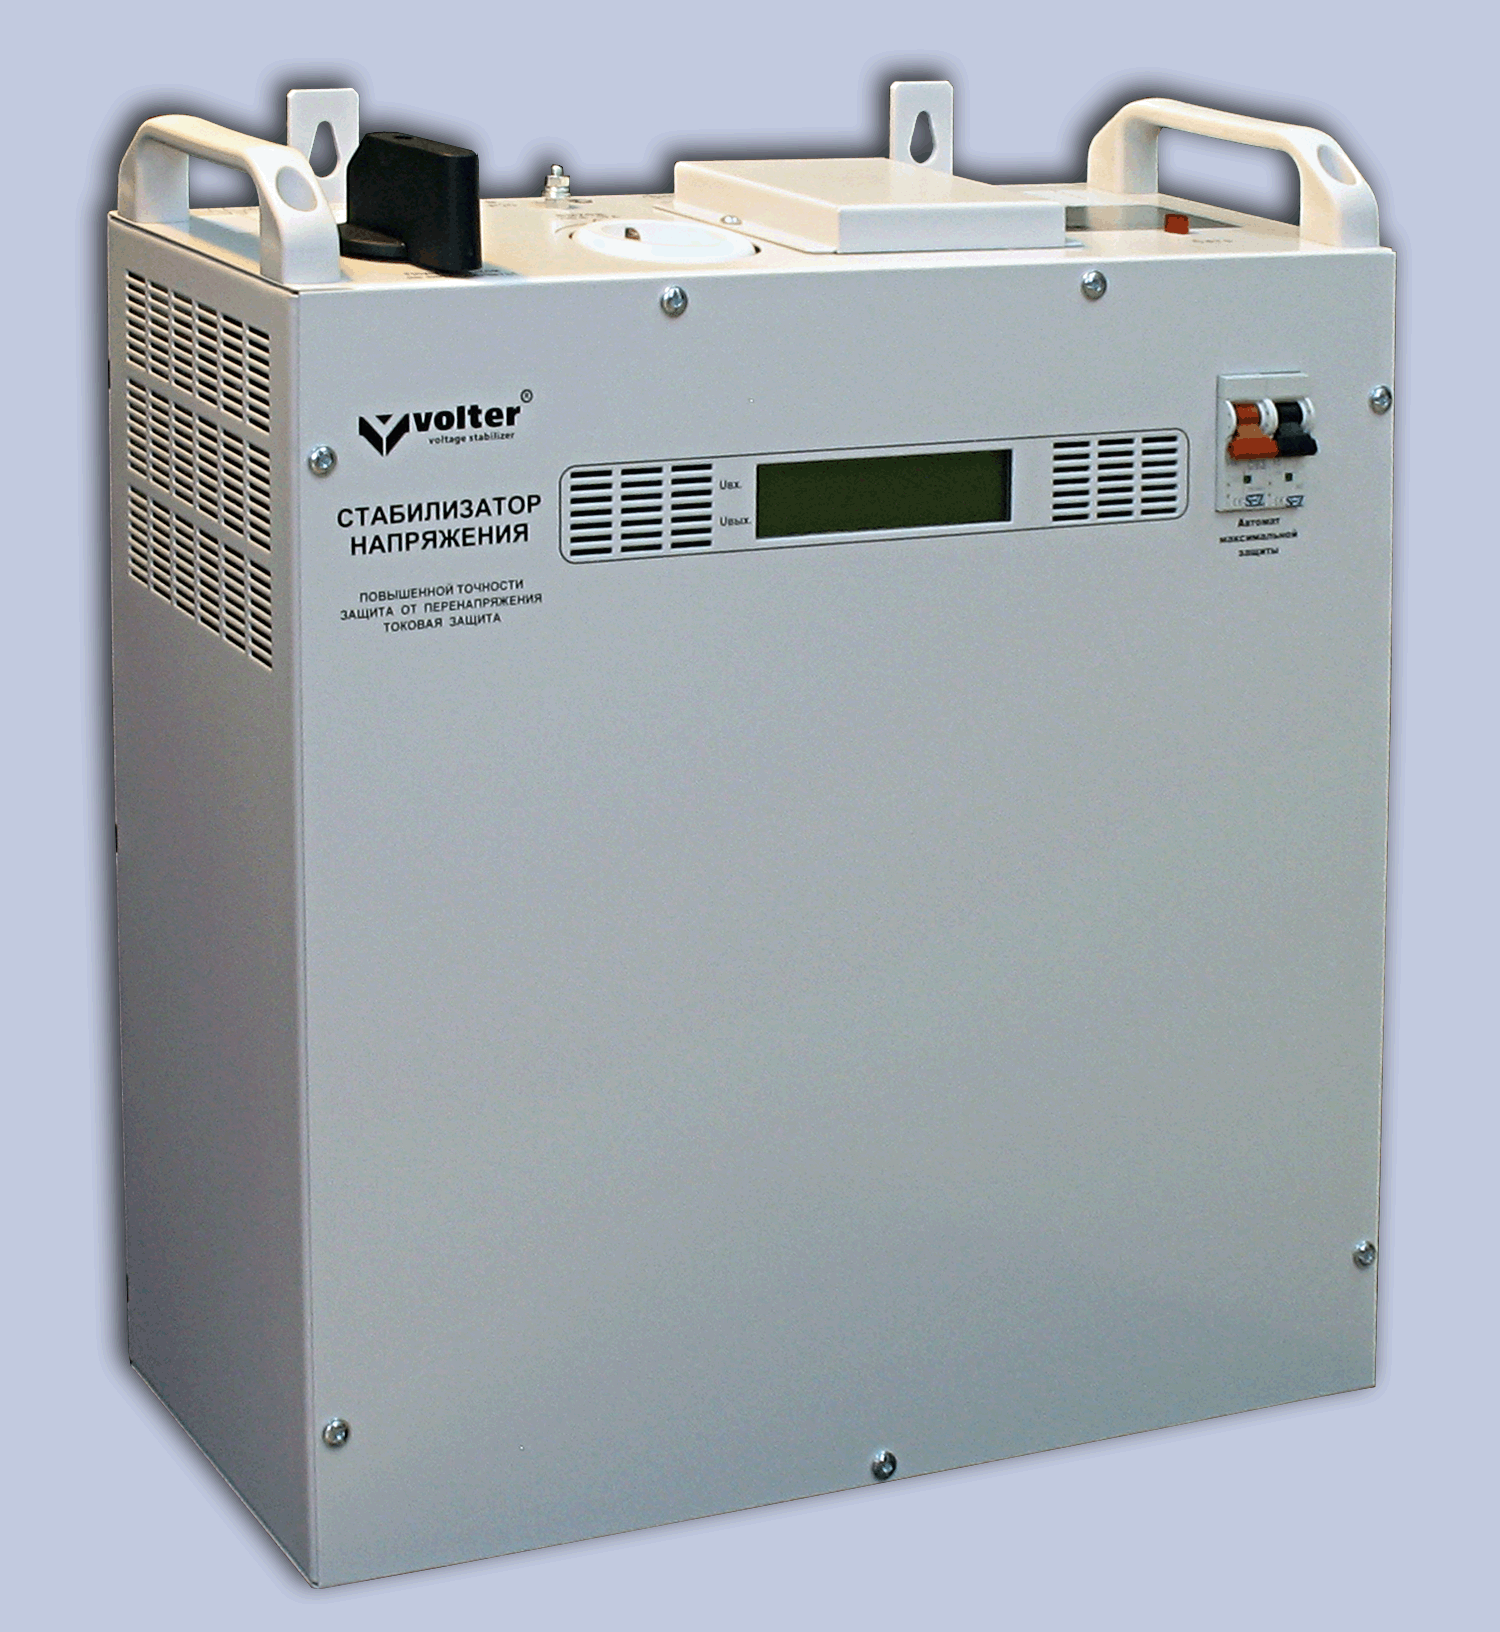 Стабилизатор 1-фазный СНПТО-14 пттм, мощность 14кВт, размеры 450х420х190, масса 21кг